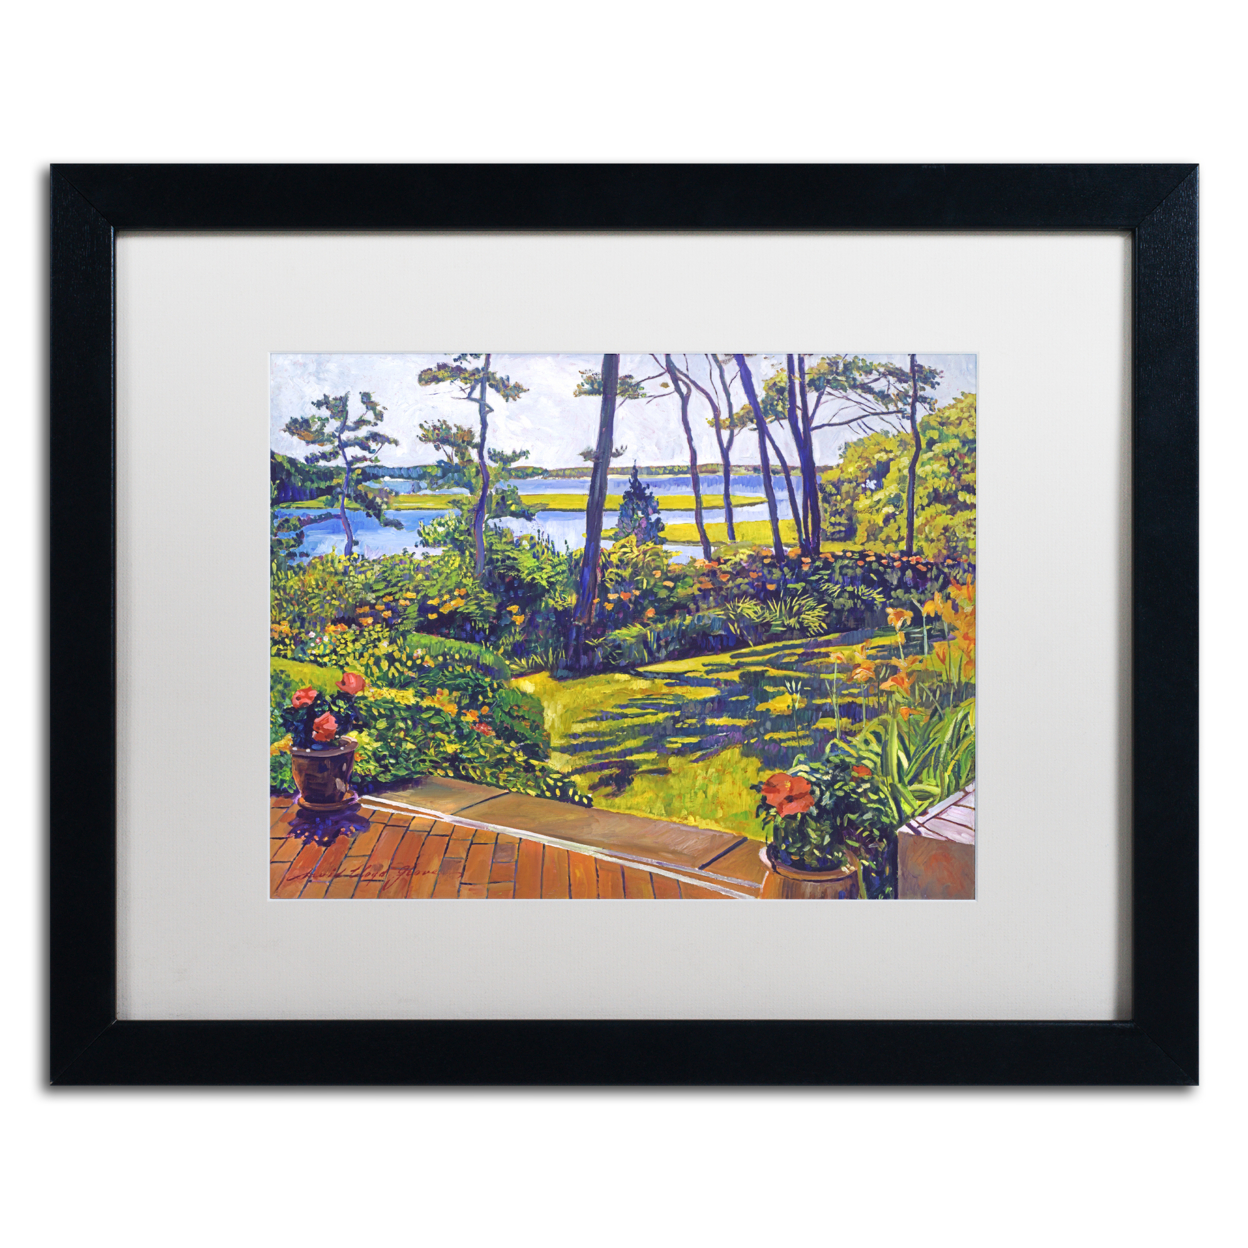 David Lloyd Glover 'Ocean Lagoon Garden' Black Wooden Framed Art 18 X 22 Inches